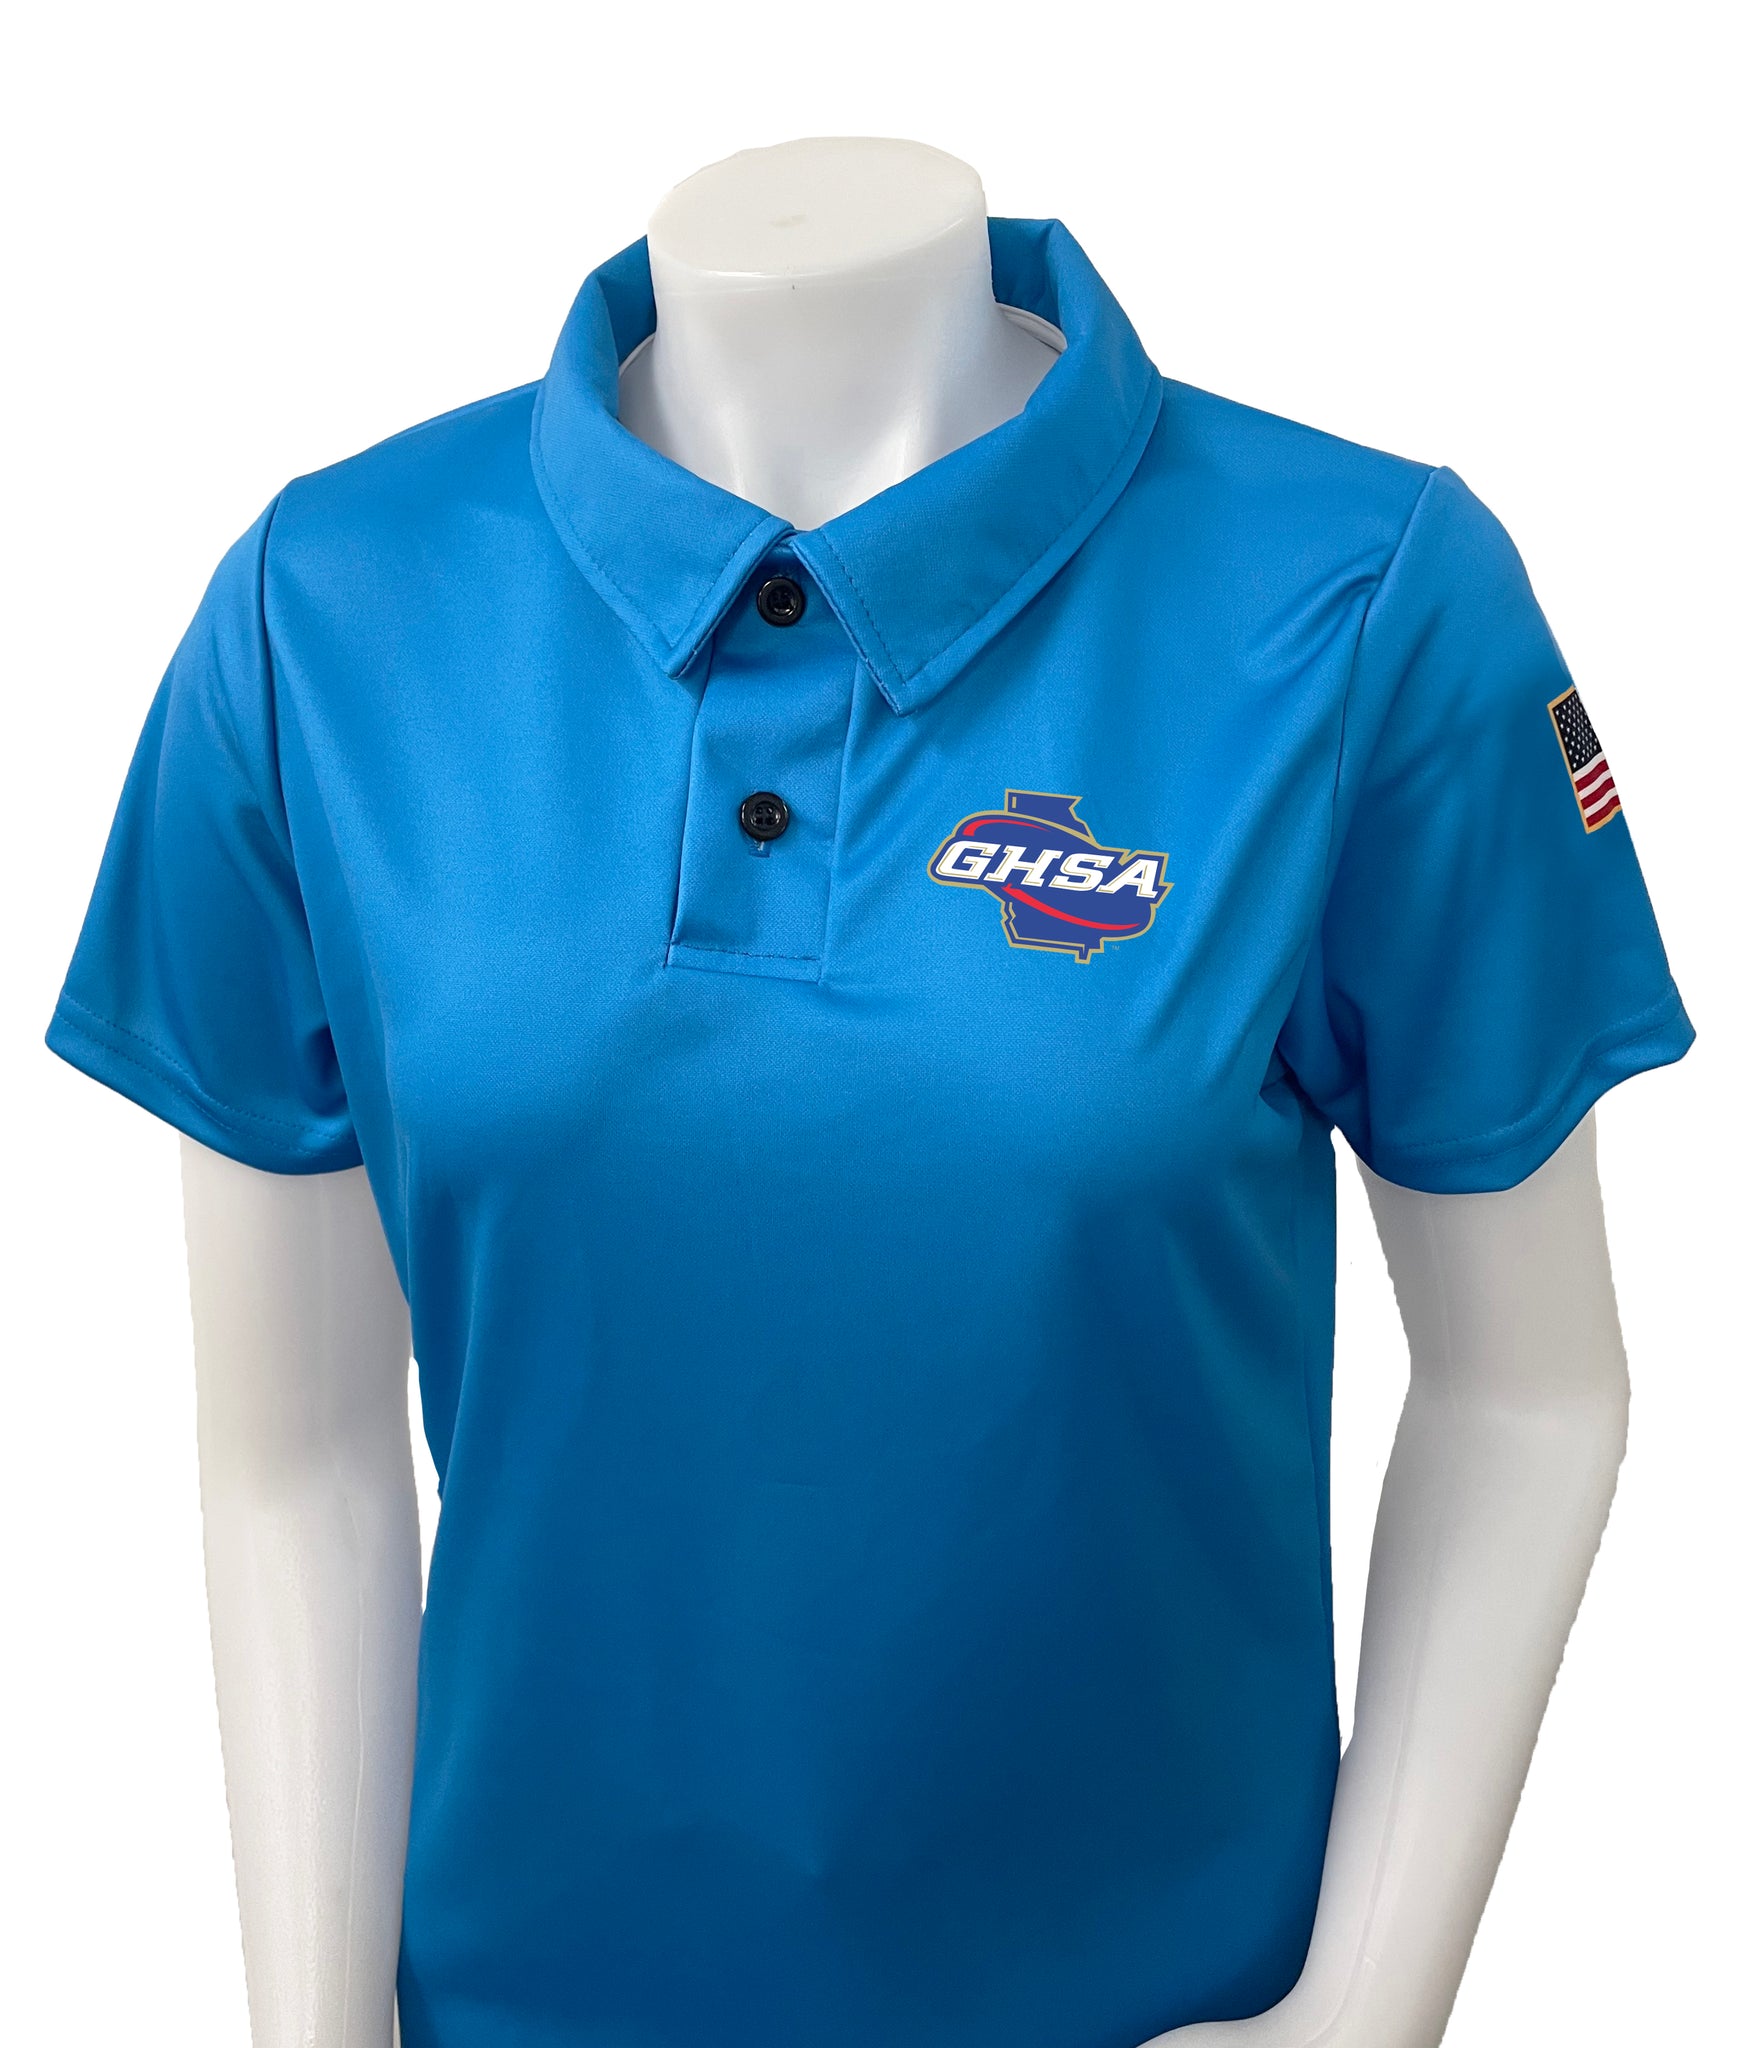 USA422GA-BB - Smitty "Made in USA" - Women's "BRIGHT BLUE" Georgia Volleyball Shirt